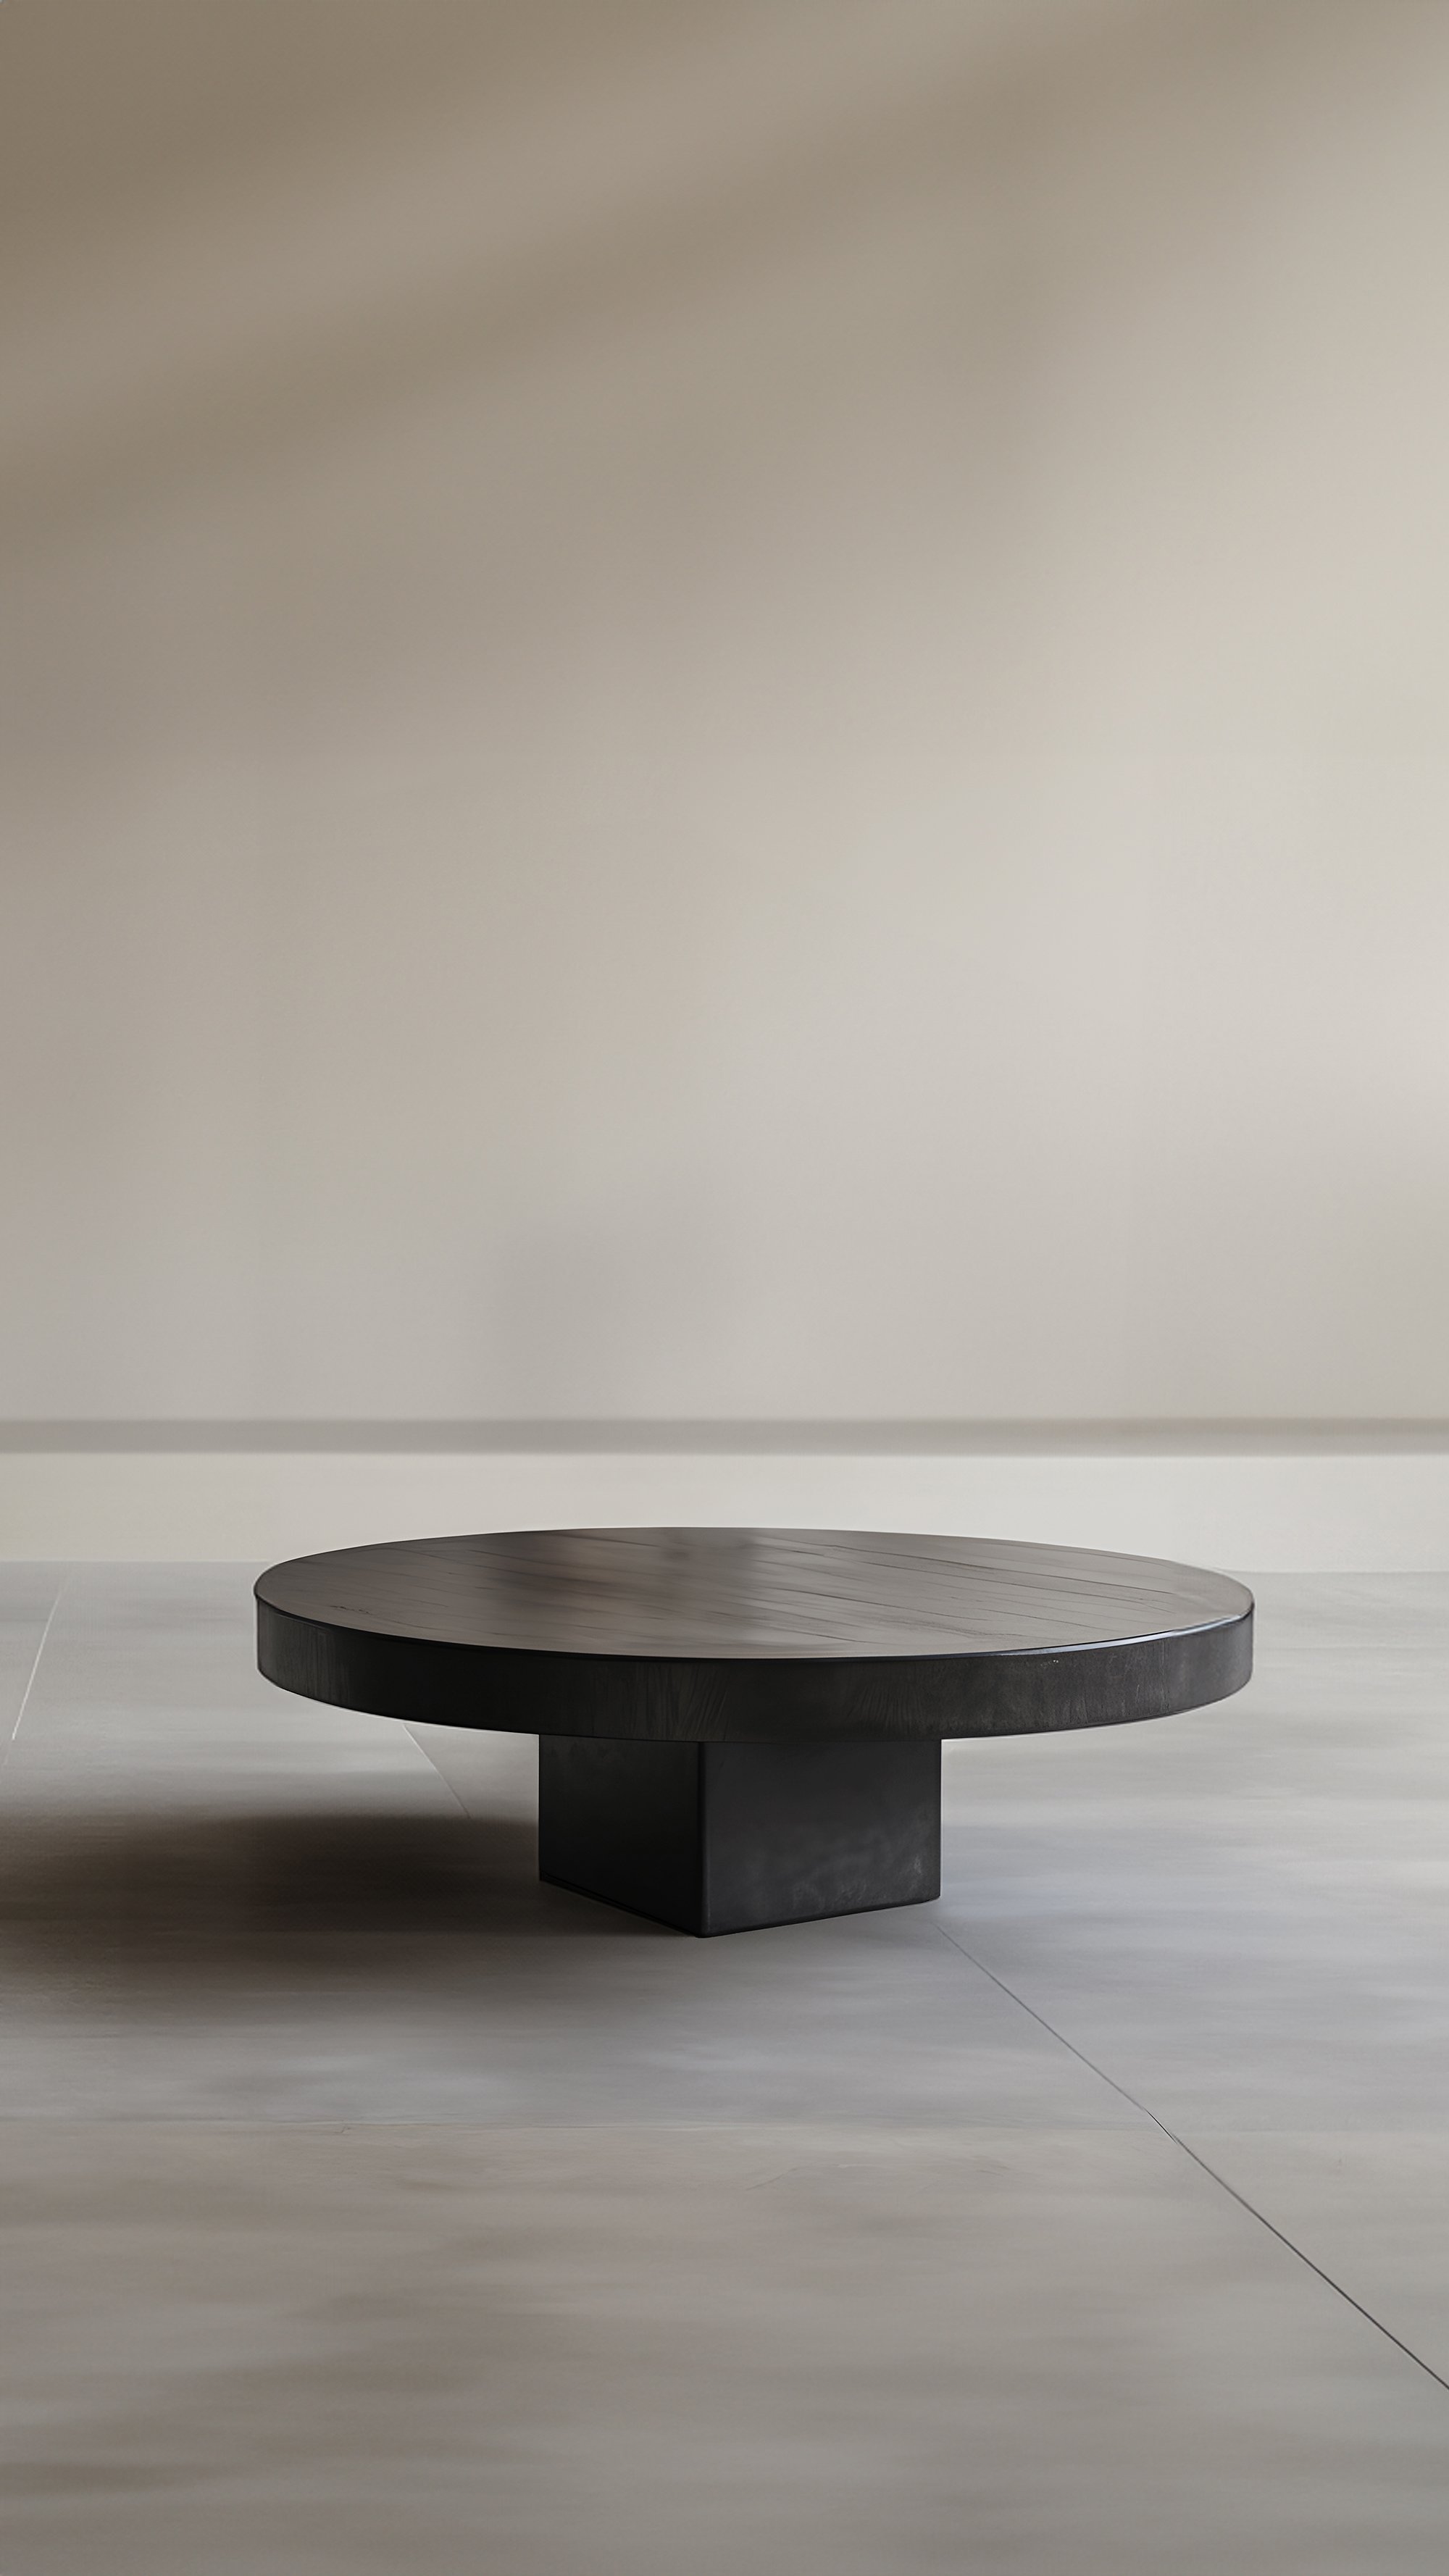 Chic Black Tinted Round Coffee Table - Urban Fundamenta 27 by NONO - 5.jpg